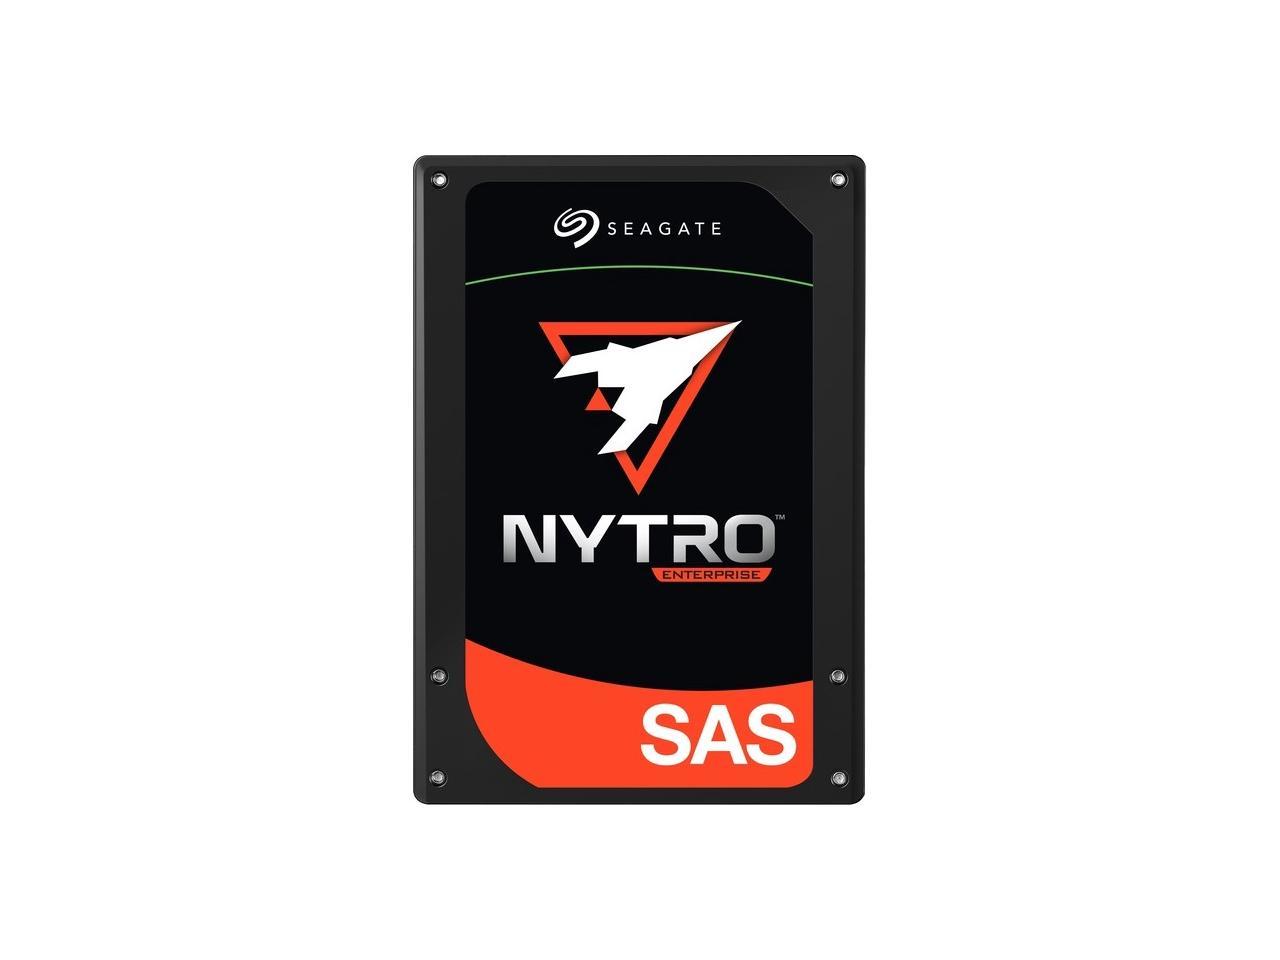 Seagate Nytro 3330 Xs15360Se70103 2.5" 15.36Tb Sas 12Gb/S 3D Etlc Solid State Disk - Enterprise